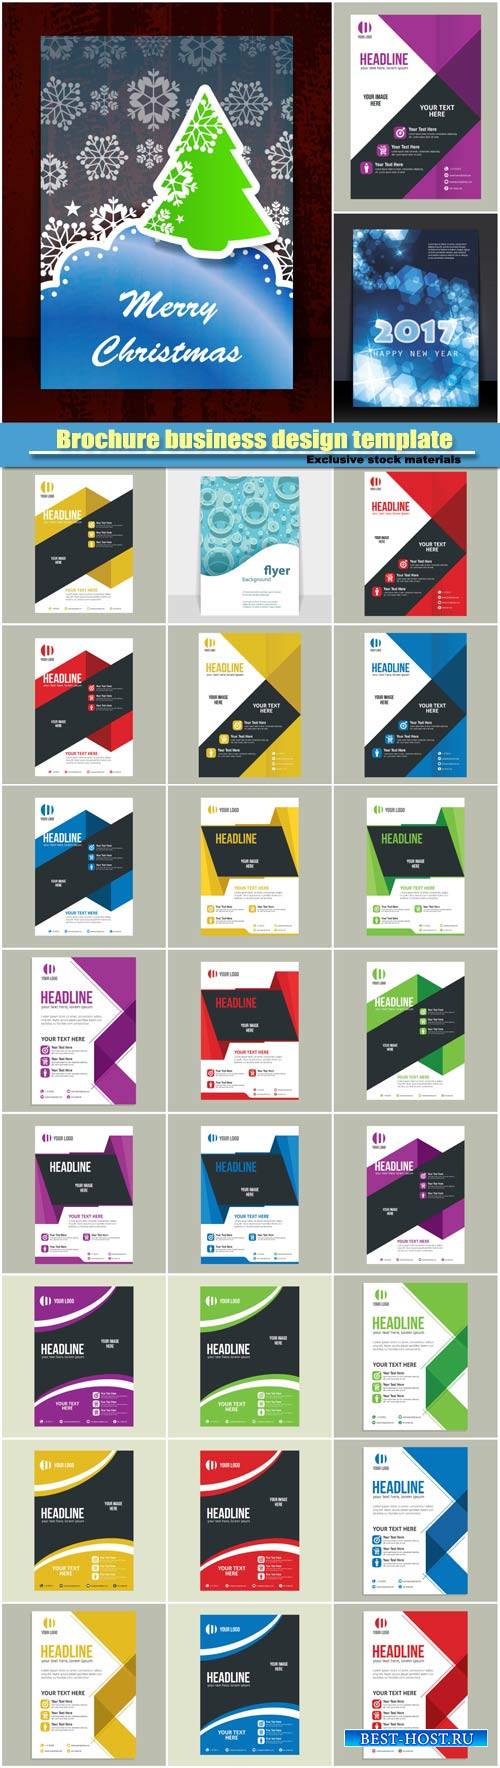 Brochure business design template